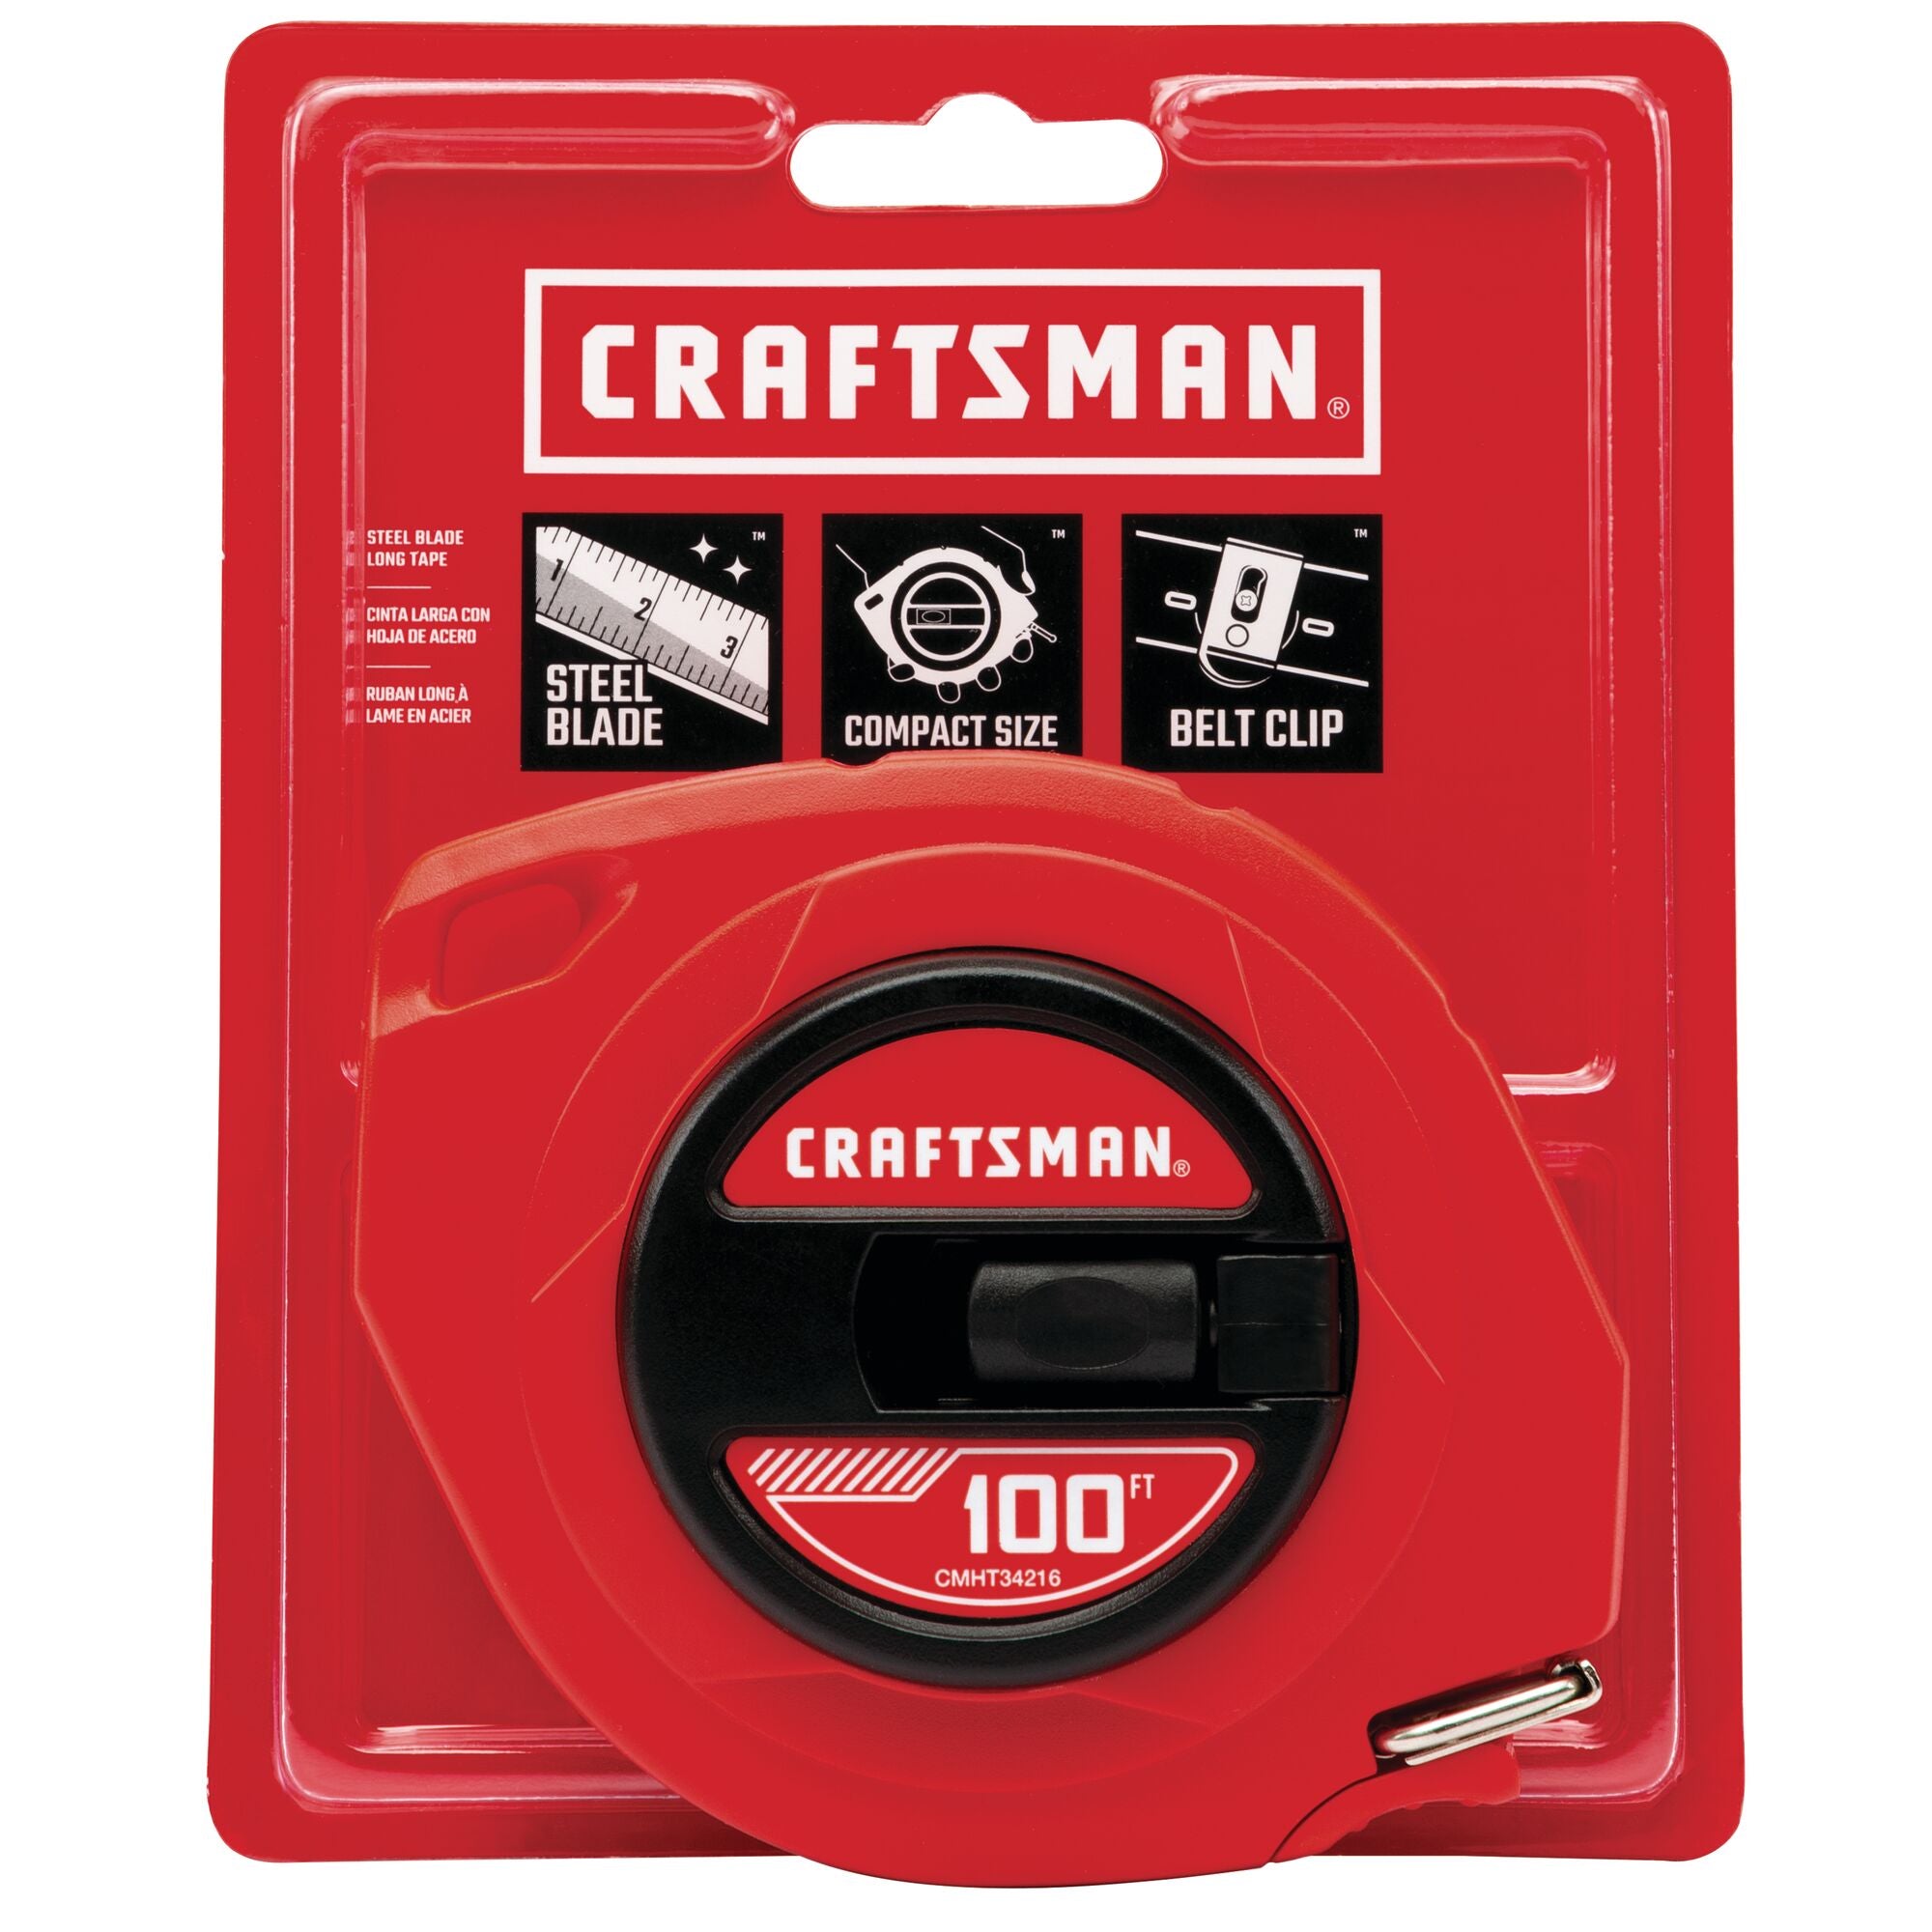 Craftsman craftsman tape measure, proreach, 25-foot (cmht37665s)